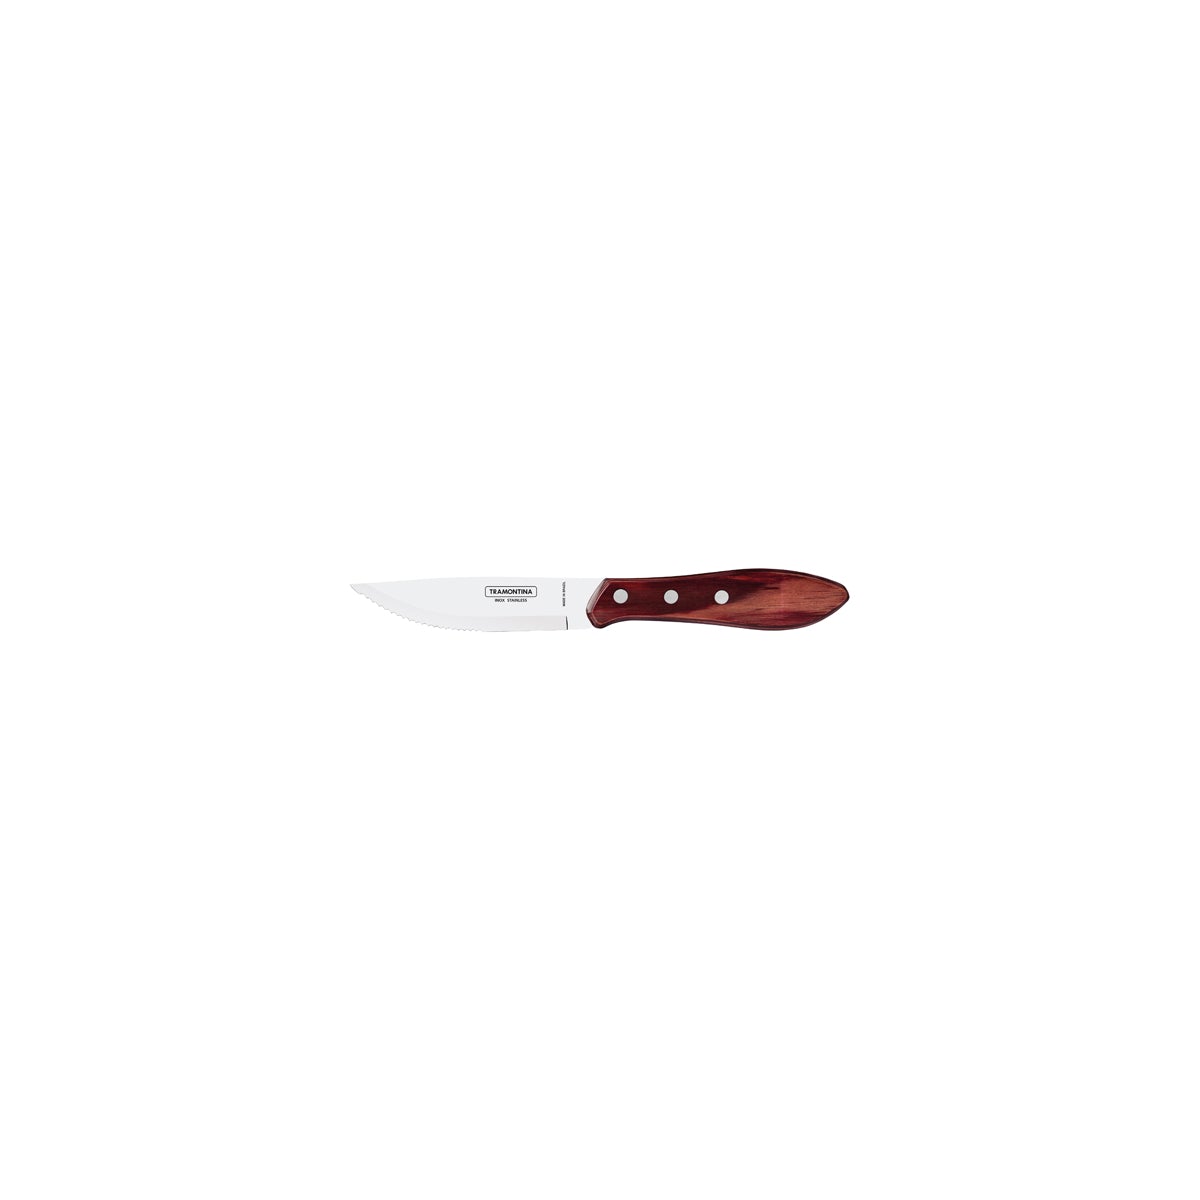 TM21185/075 Tramontina Churrasco Steak Knife Jumbo Serrated Wide Blade with Polywood Handle Red 127mm Tomkin Australia Hospitality Supplies